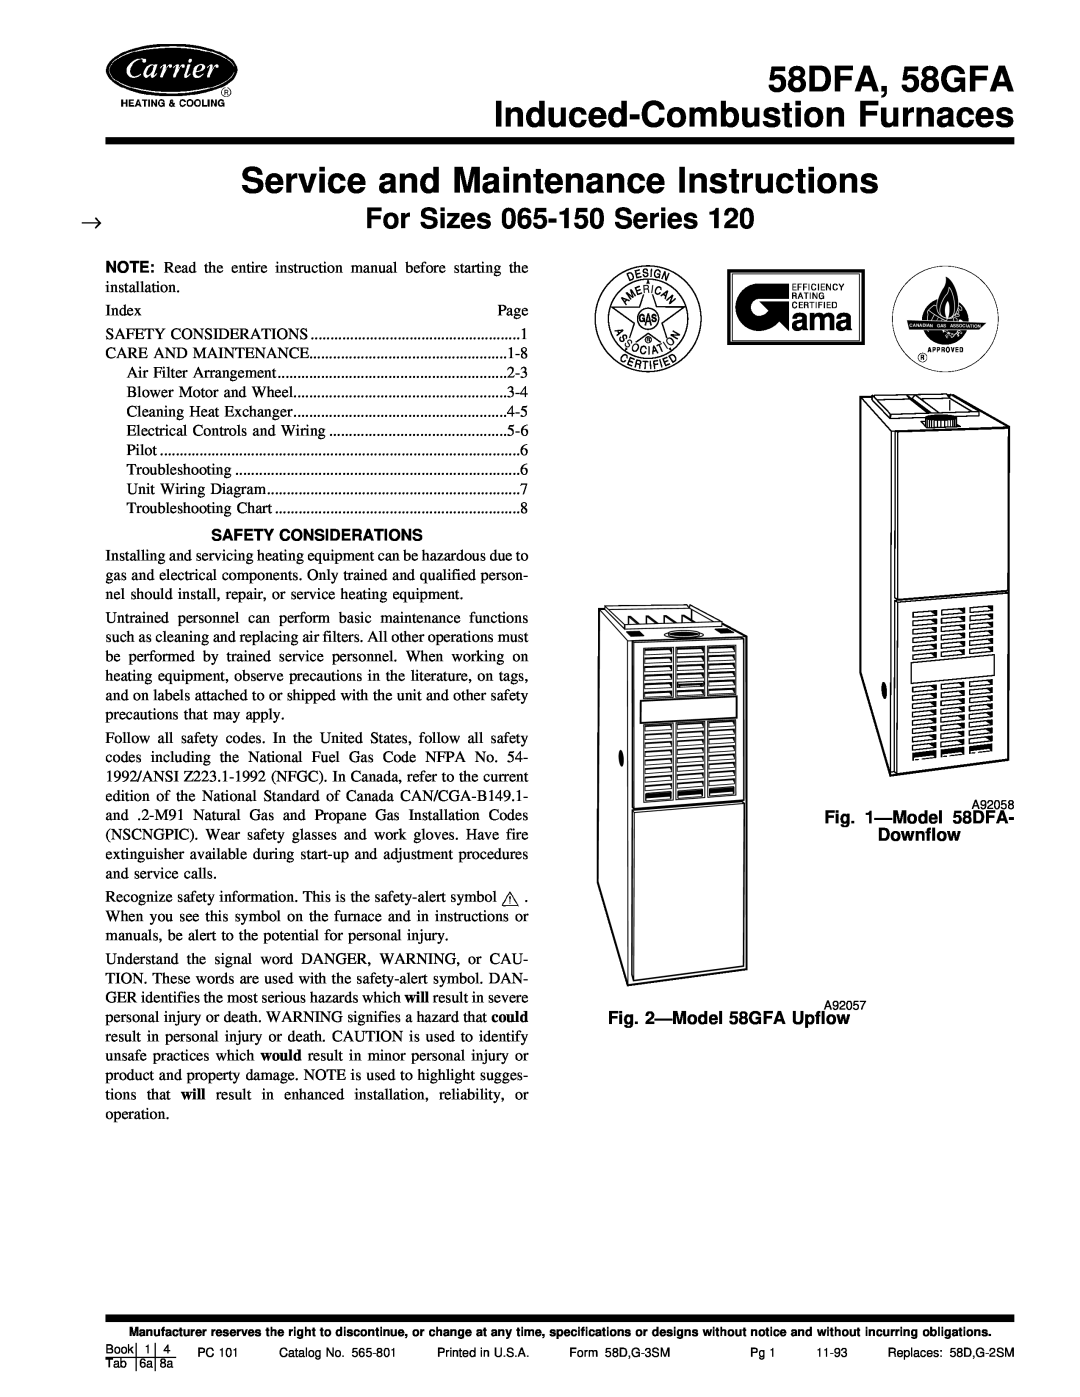 Carrier instruction manual ÐModel 58DFA Downflow, ÐModel 58GFA Upflow, Safety Considerations, 58DFA, 58GFA 